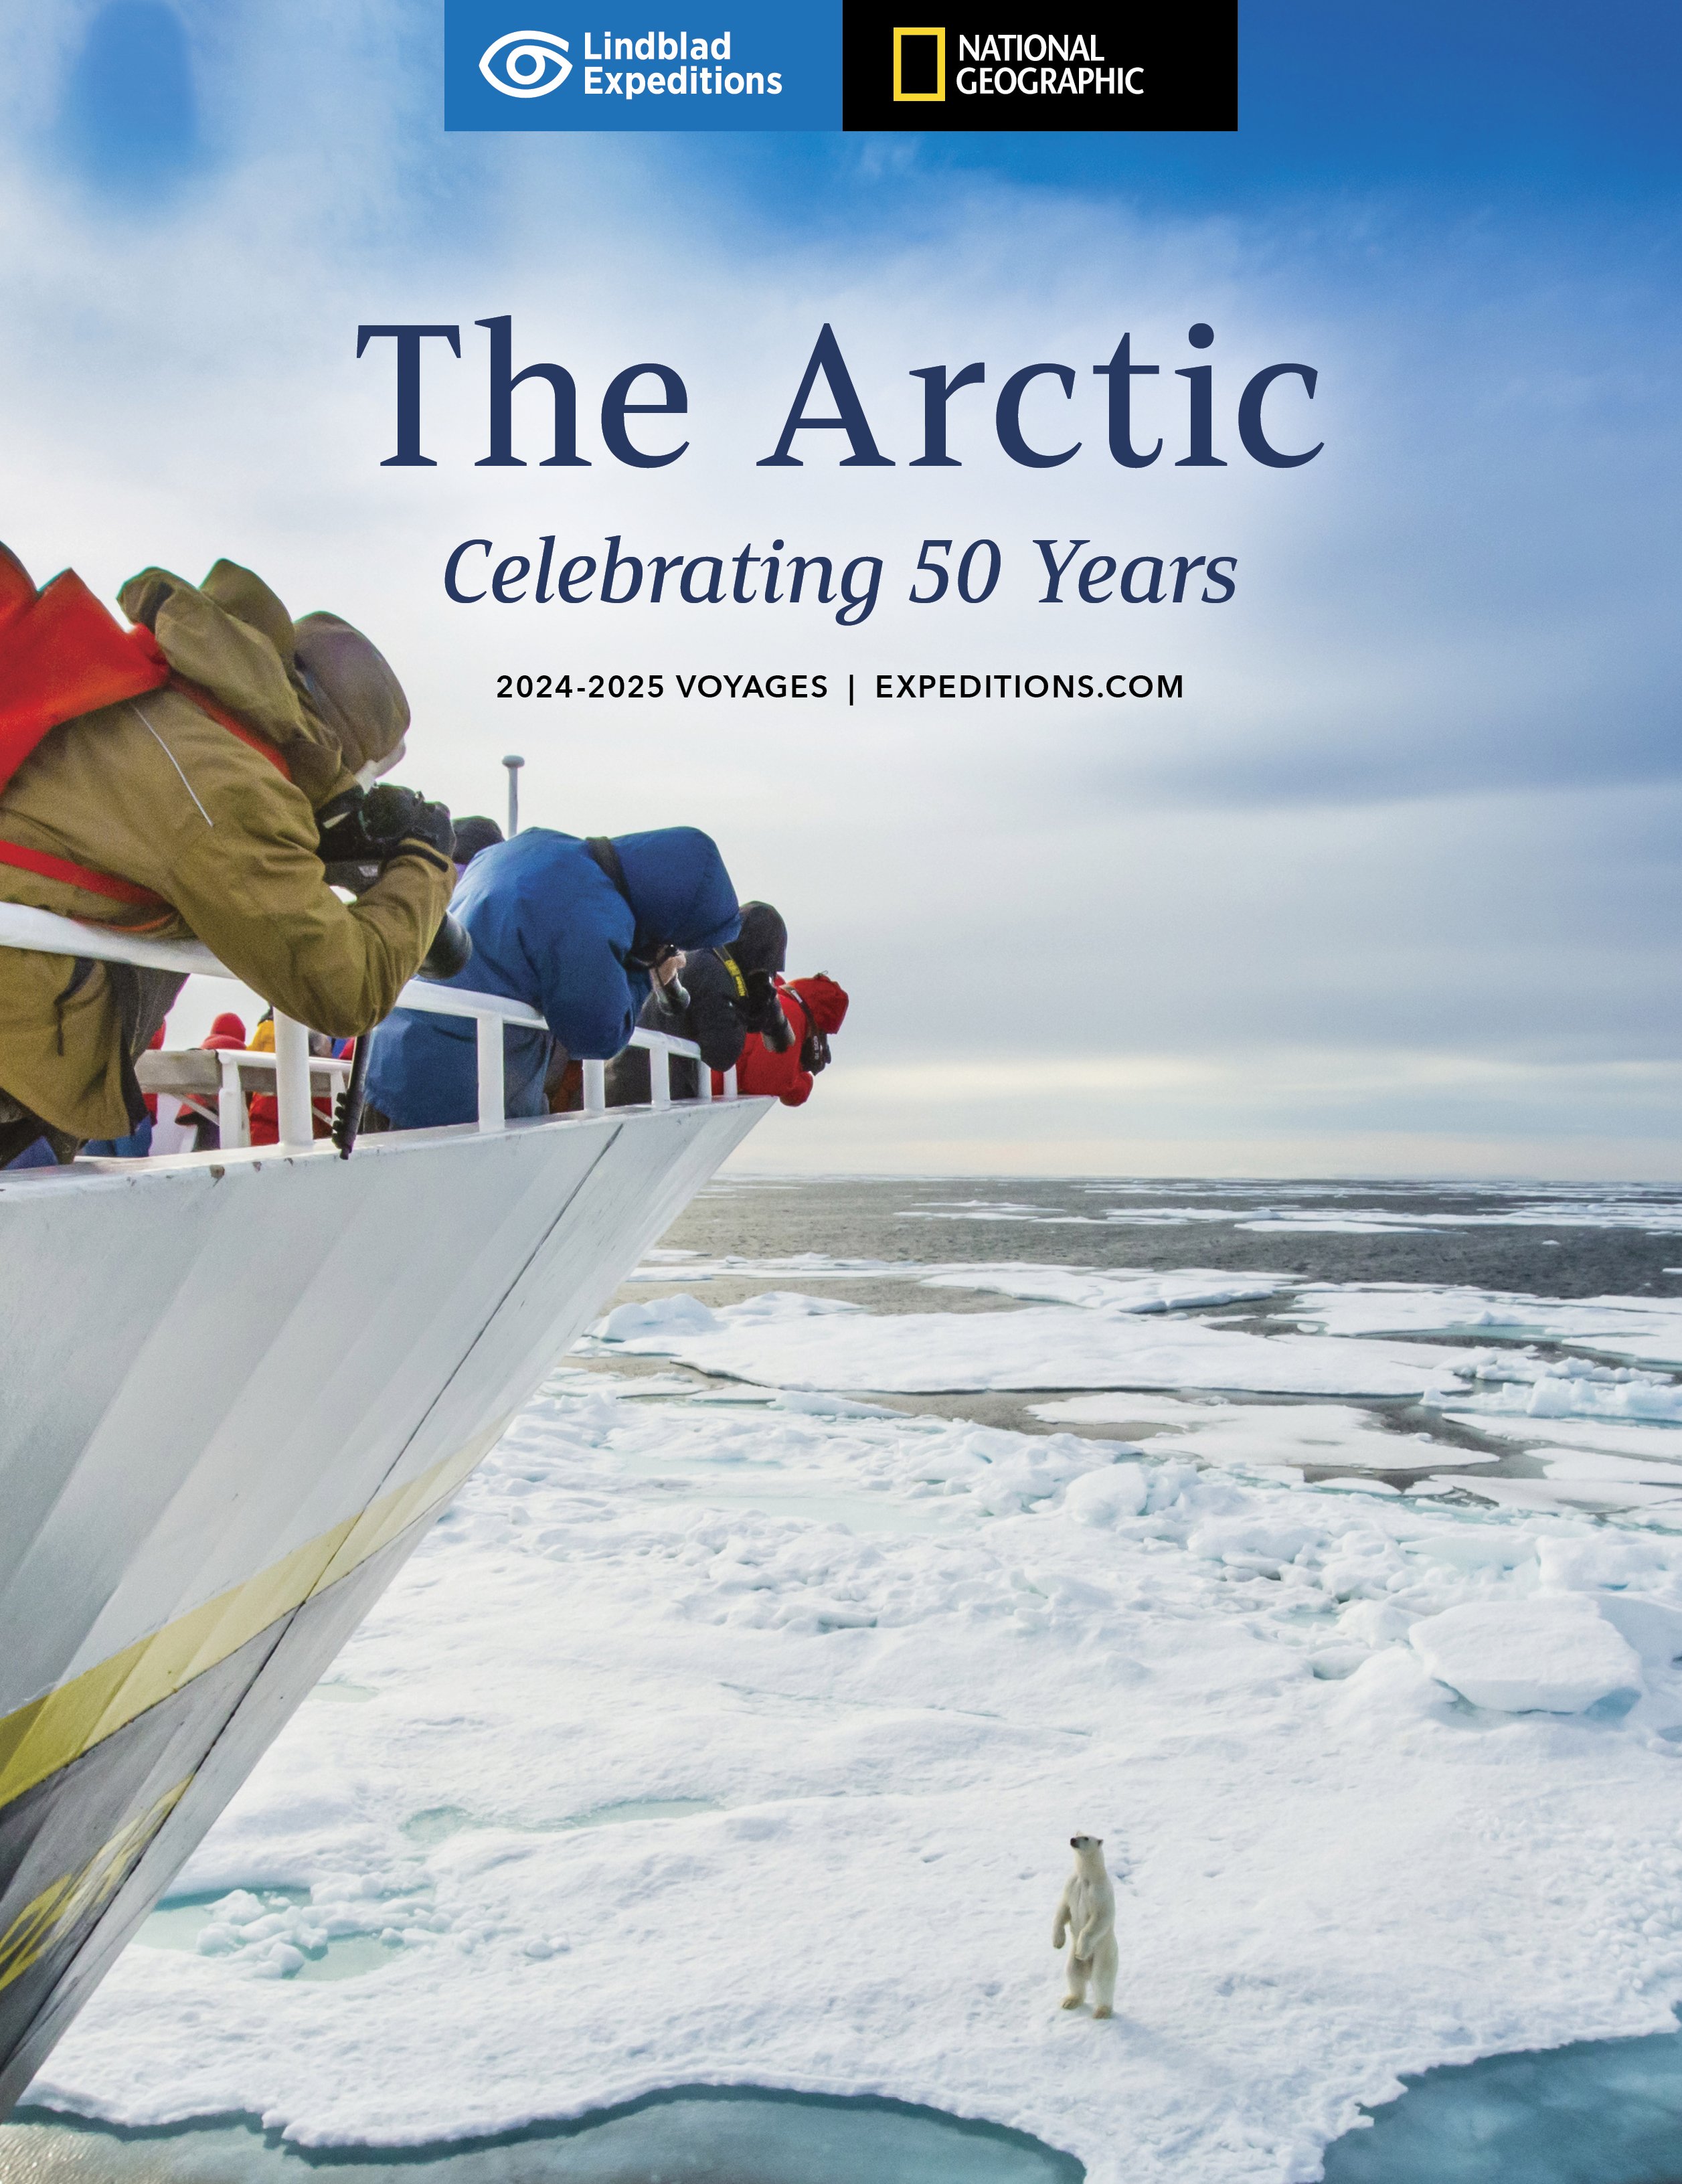 Arctic Cruise | Arctic Adventure Travel | Lindblad Expeditions